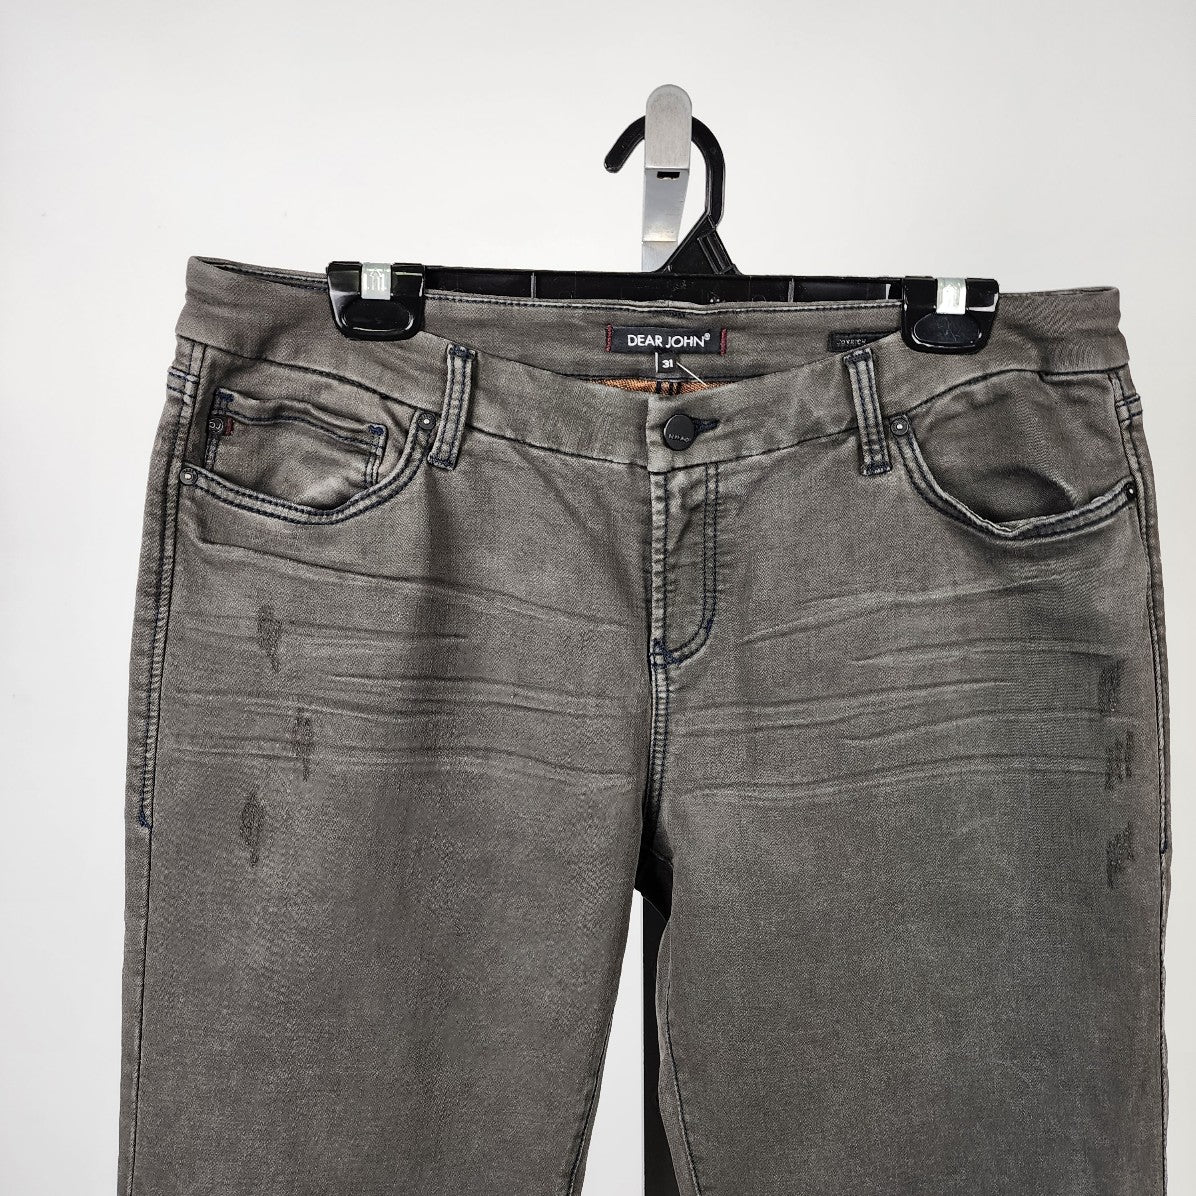 Dear John Joyrich Comfort Skinny Grey Distressed Jeans Size 31